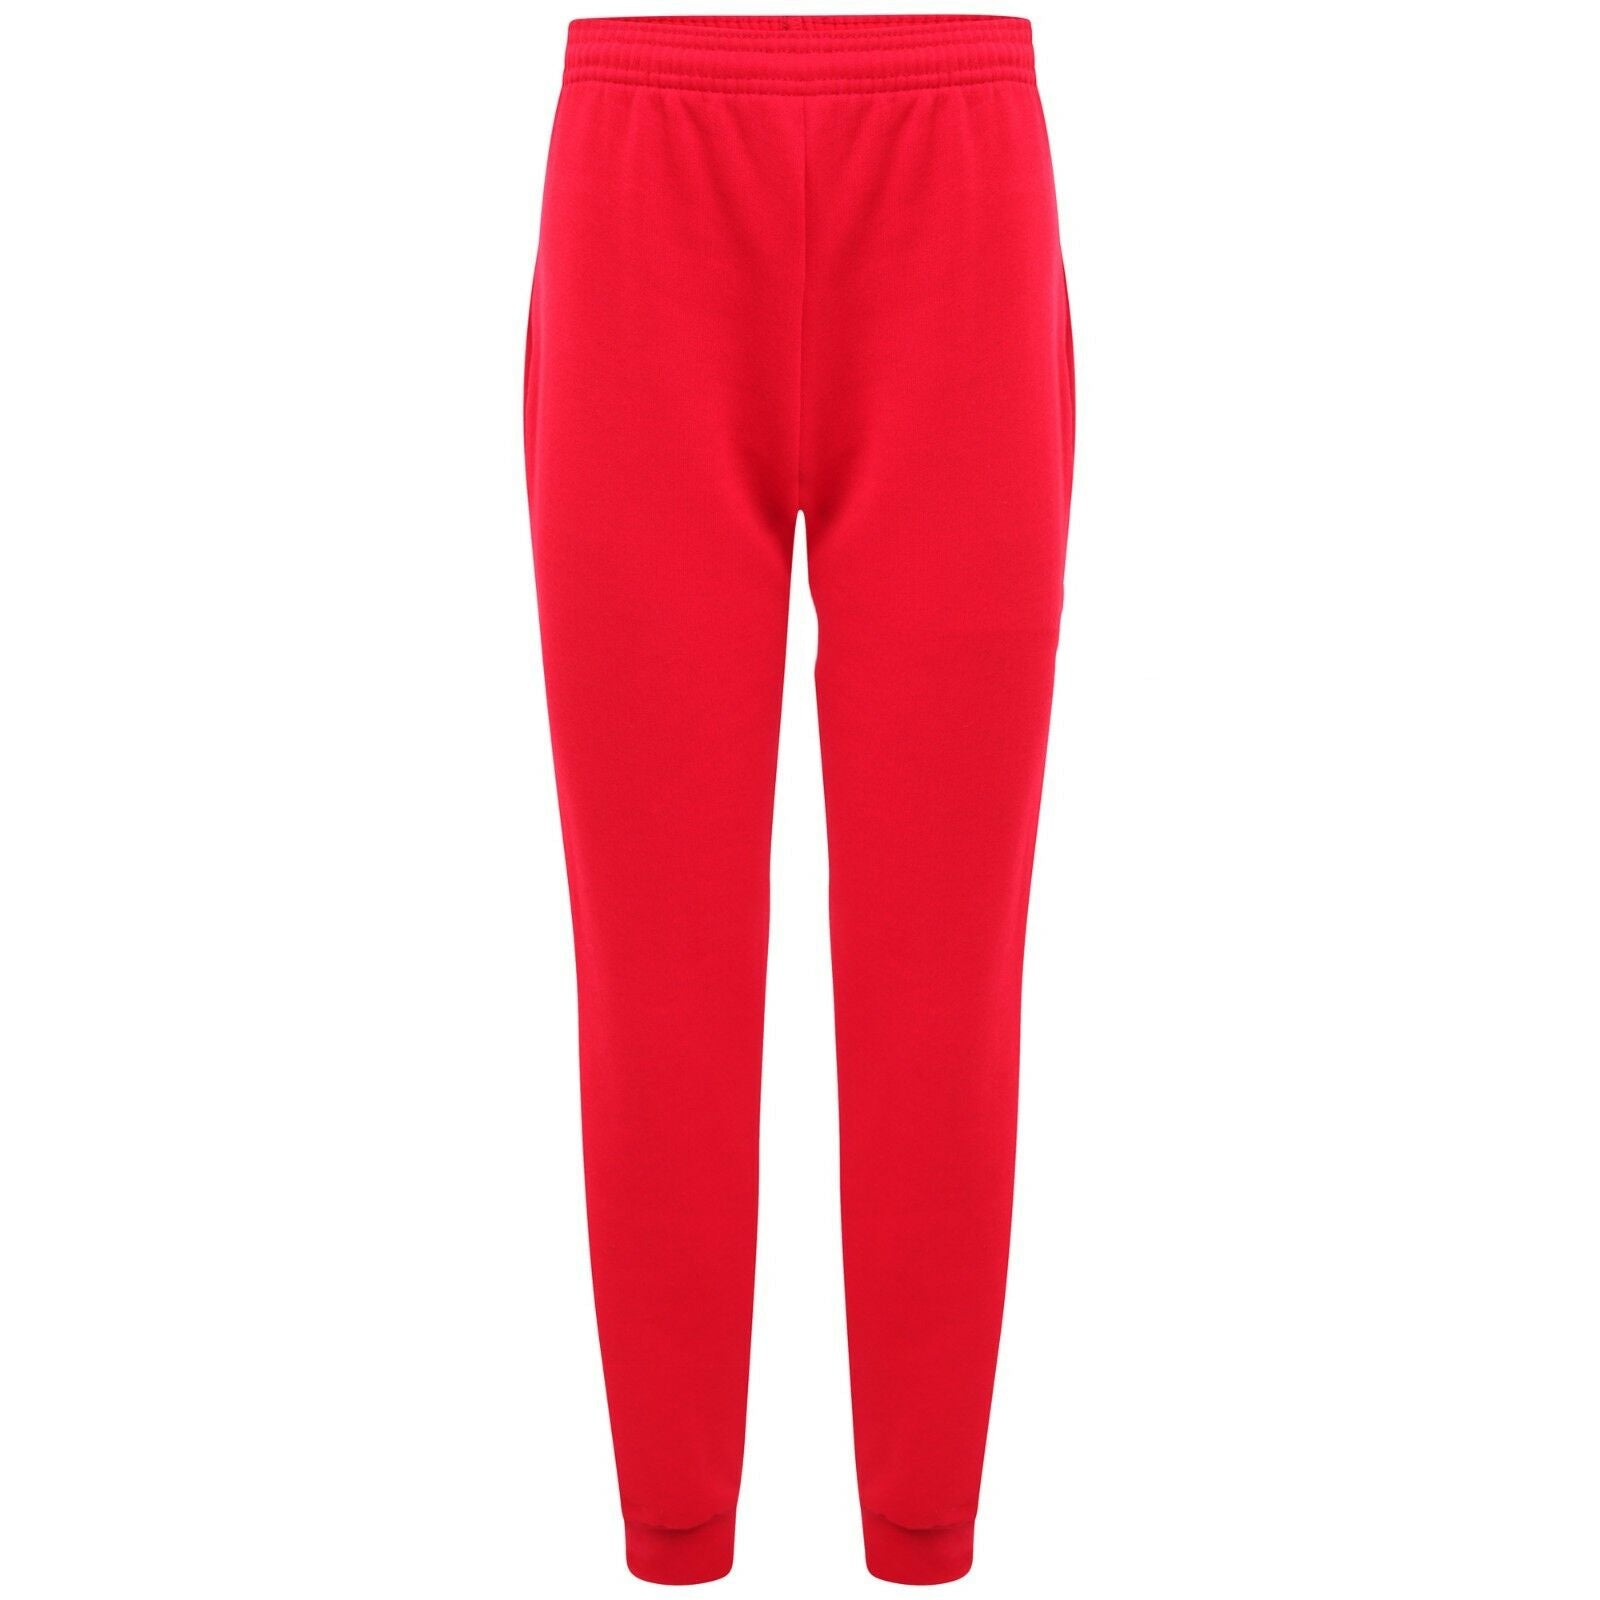 Unisex Boys Girls Fleece PE Gym School Jogging Bottoms Trousers Joggers Pants -Red